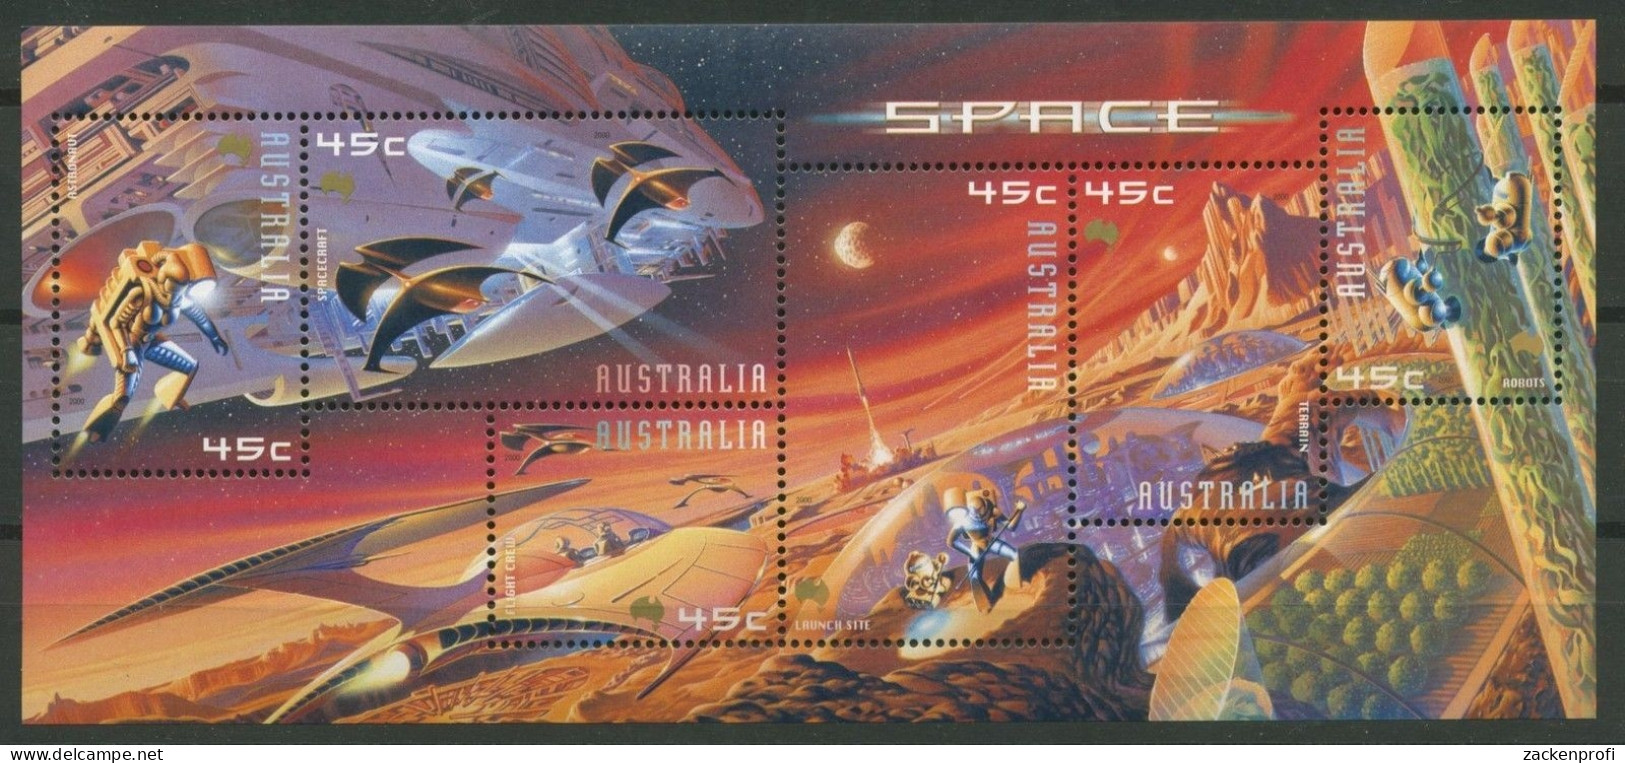 Australien 2000 Weltraum Besiedelung Des Mars Block 36 Postfrisch (C24116) - Blocs - Feuillets